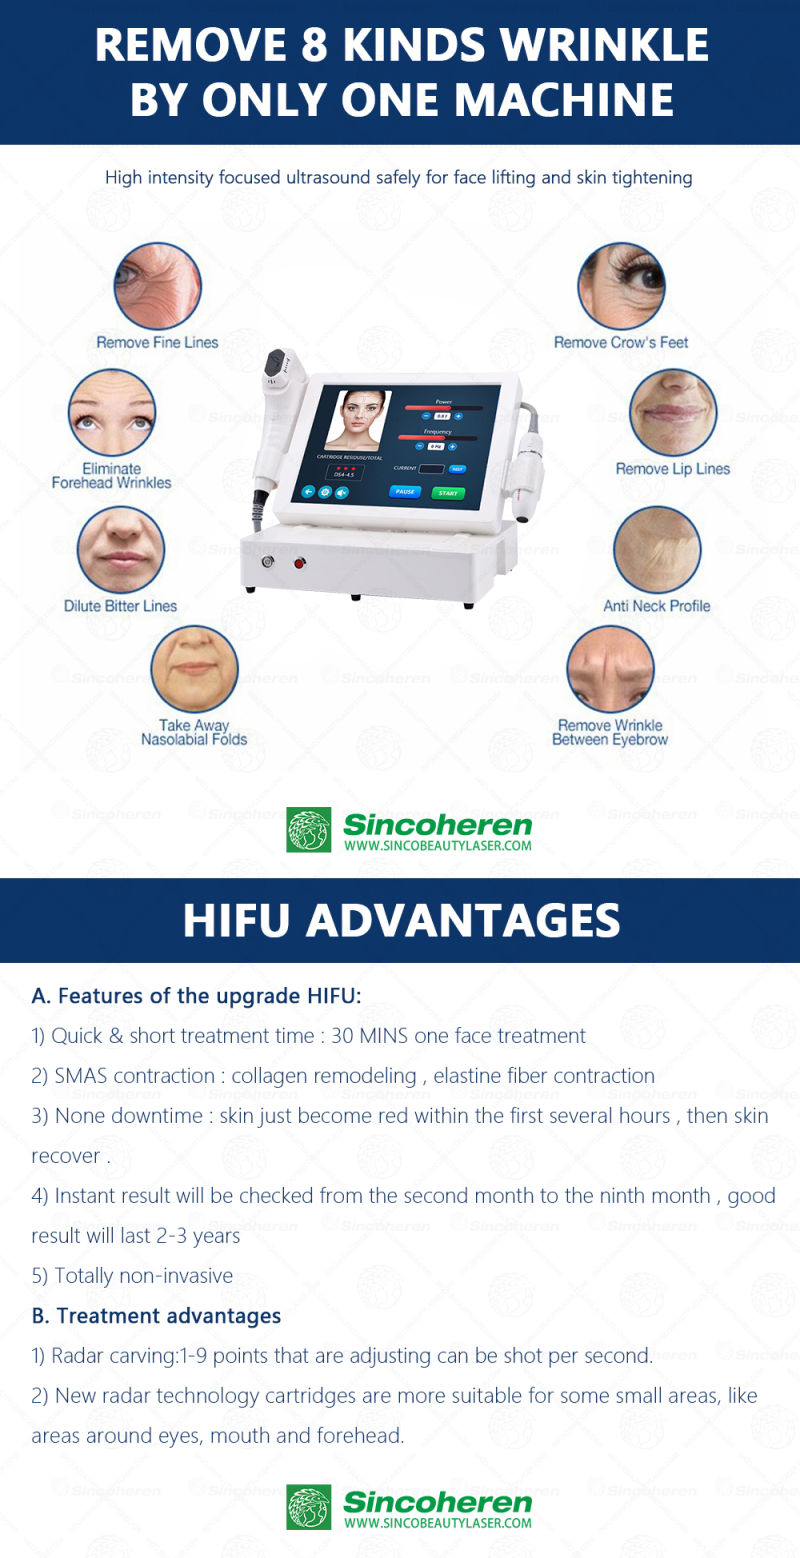 4D 3D Hifu / Wrinkle Removal Hifu Machine